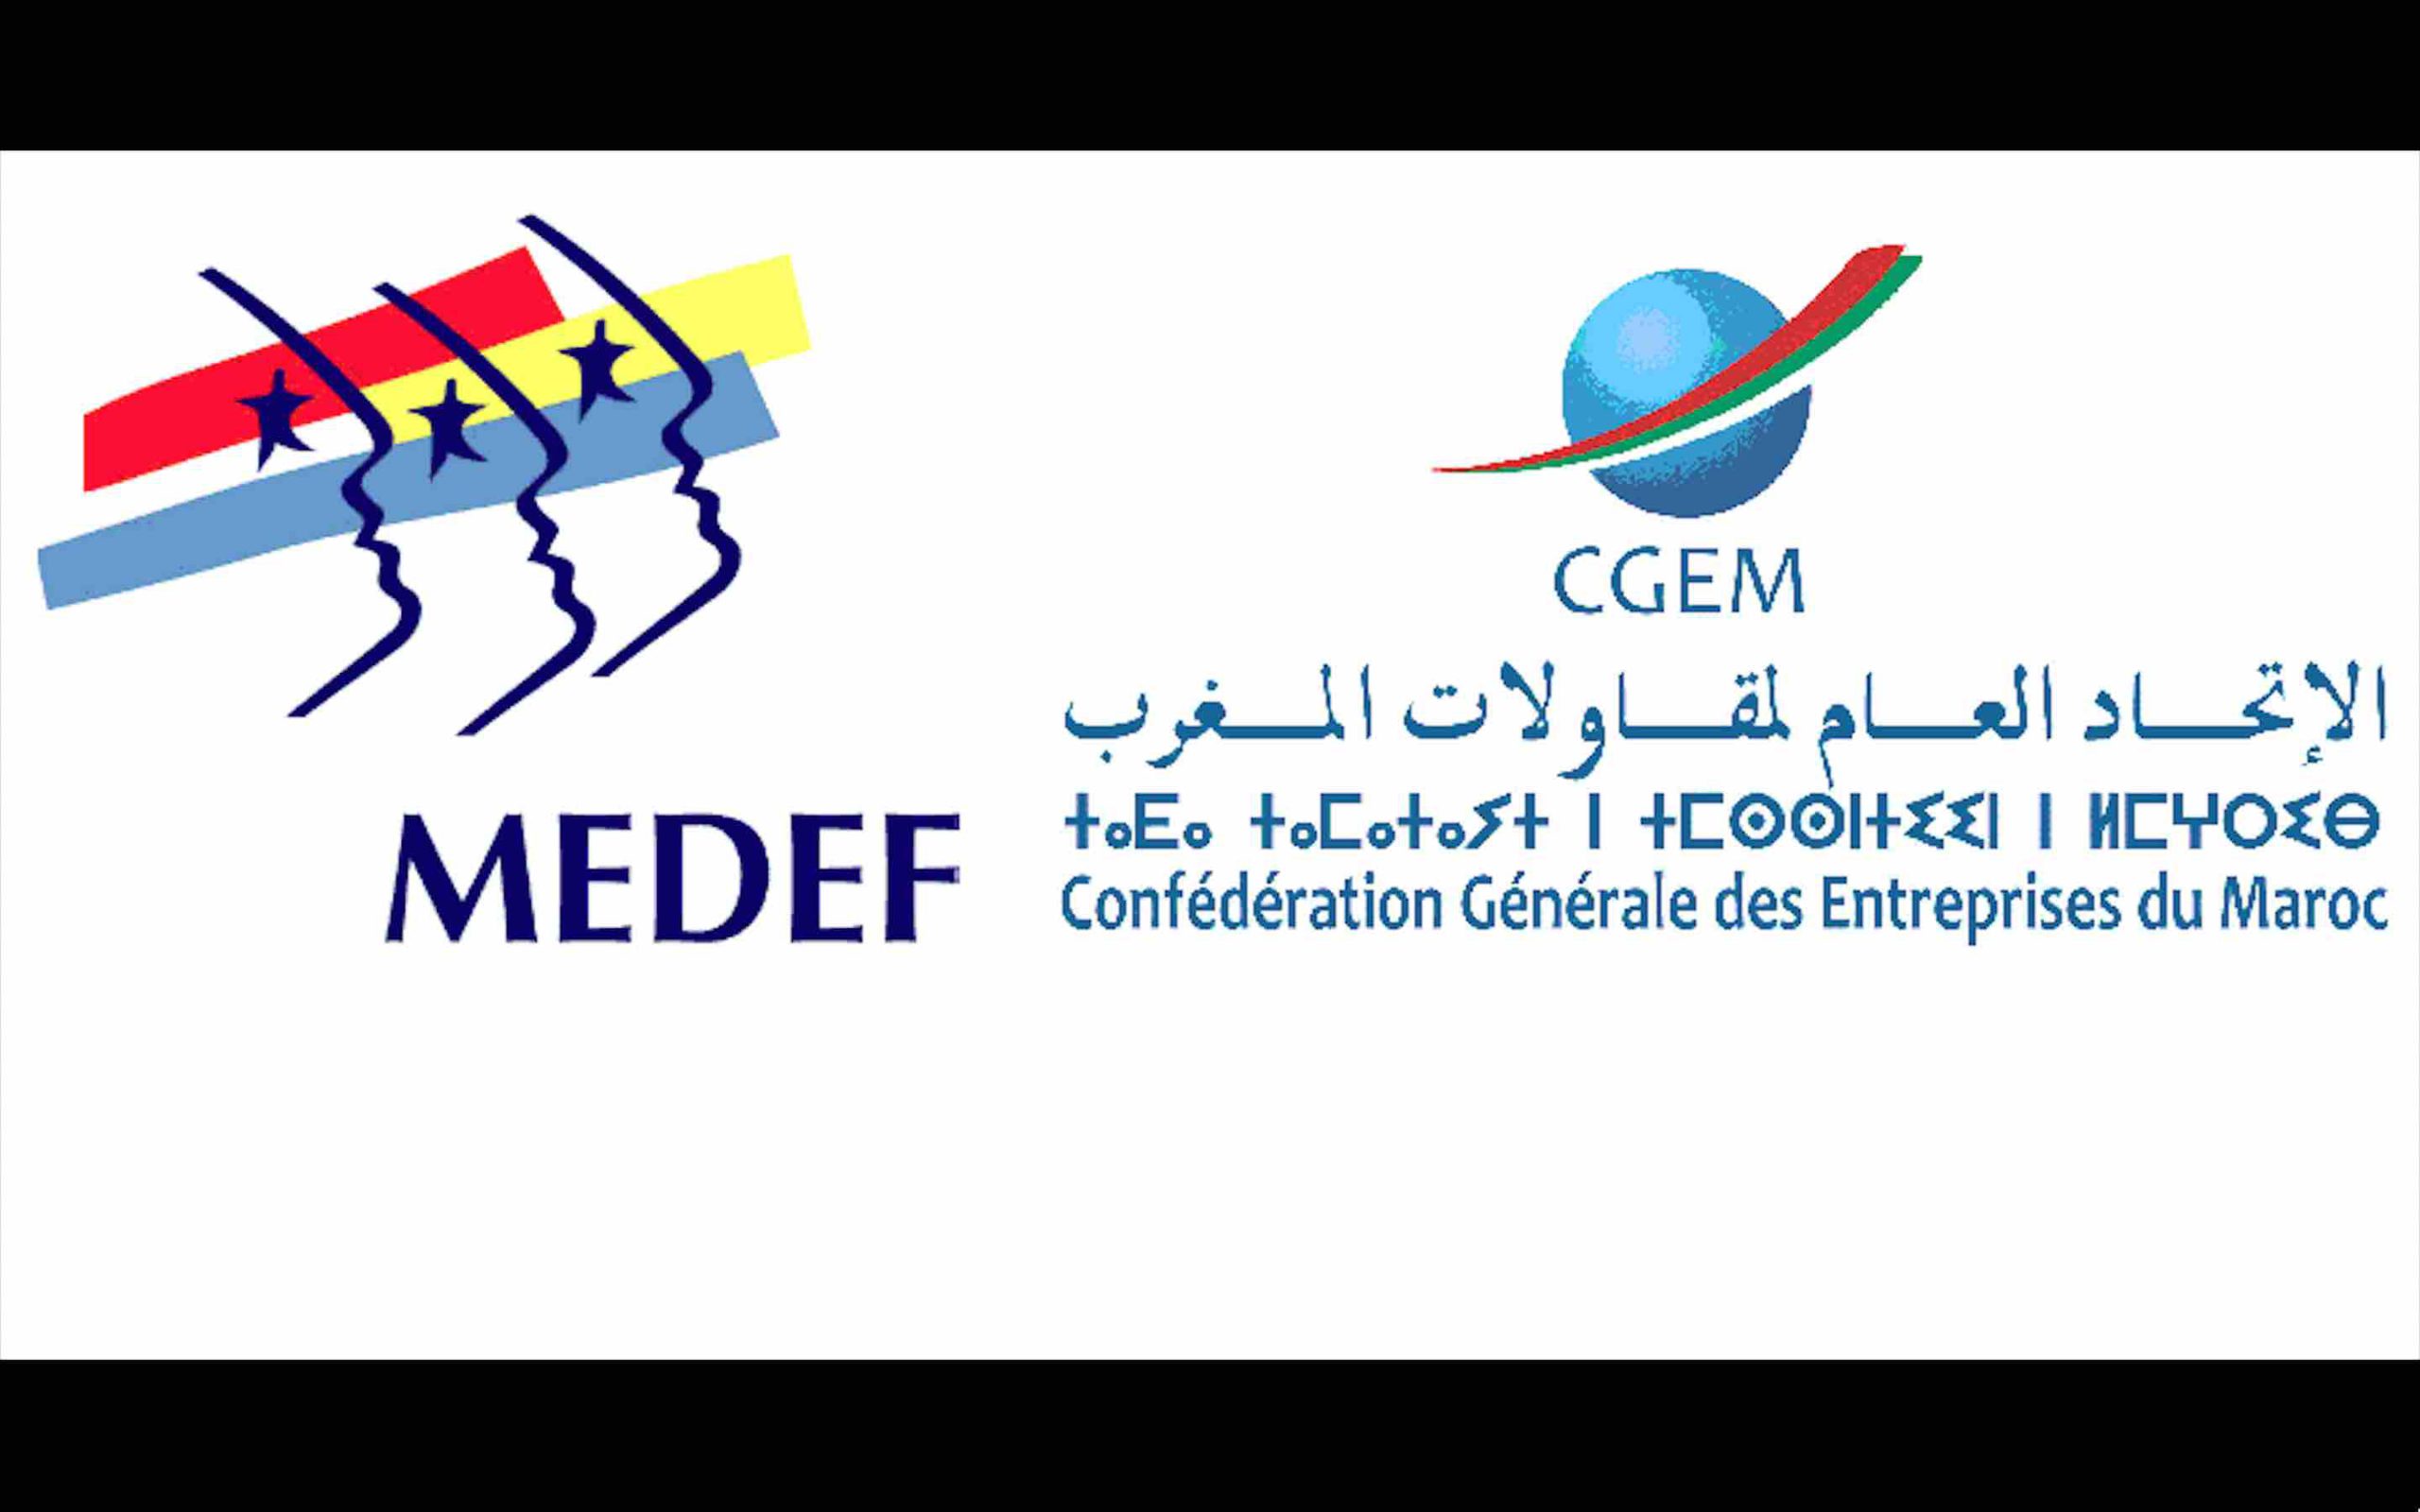 France Maroc MEDEF CGEM patronat marocain patronat français